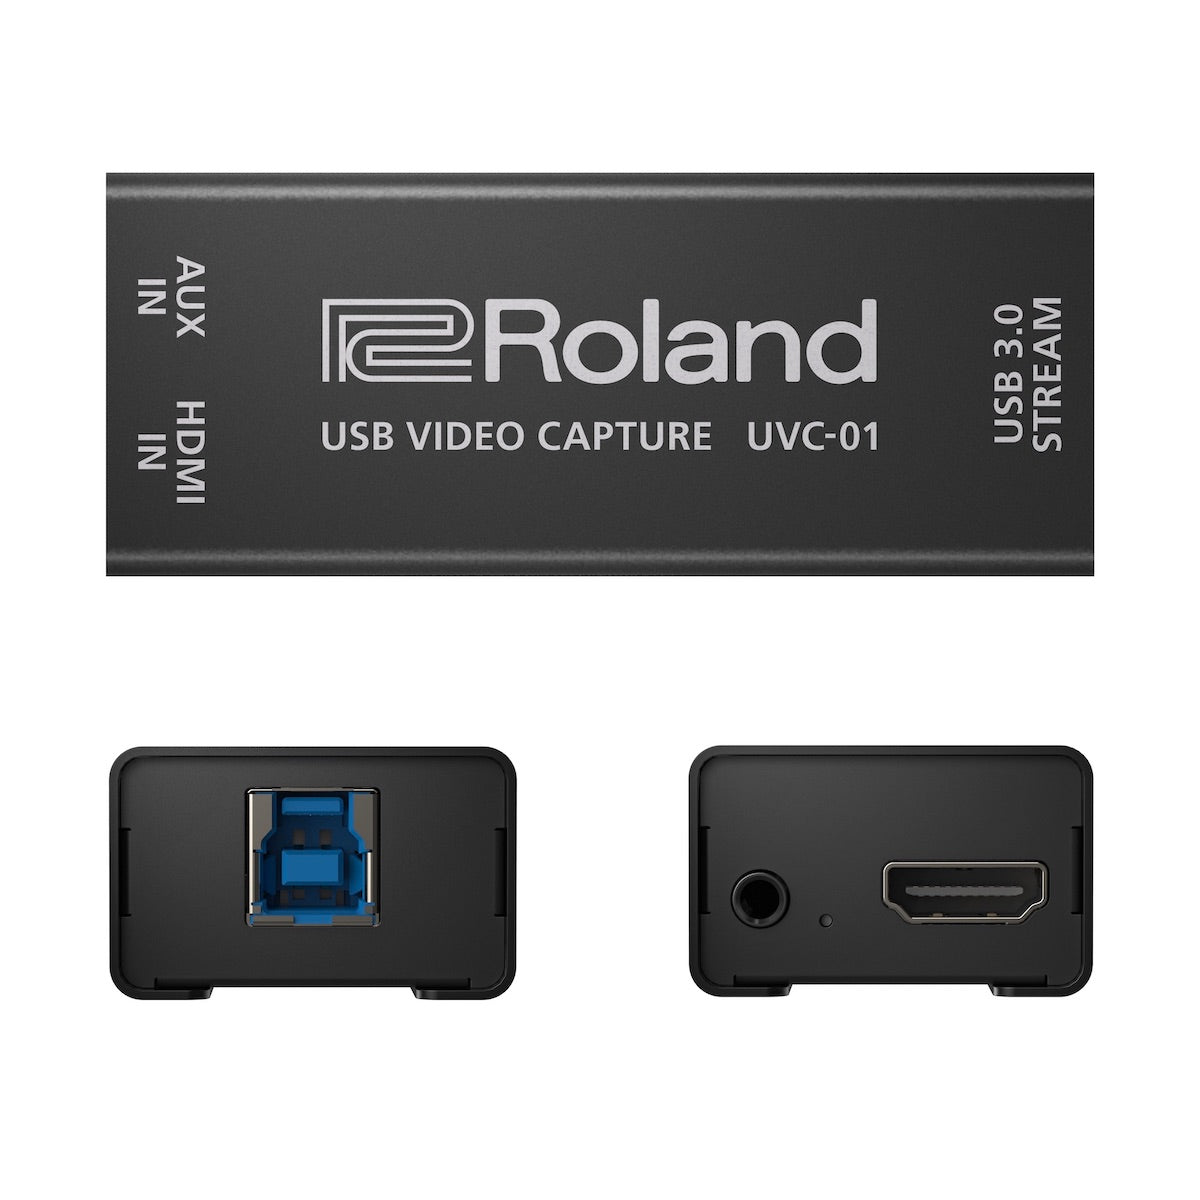 Roland  UVC-01 USB Video Capture device